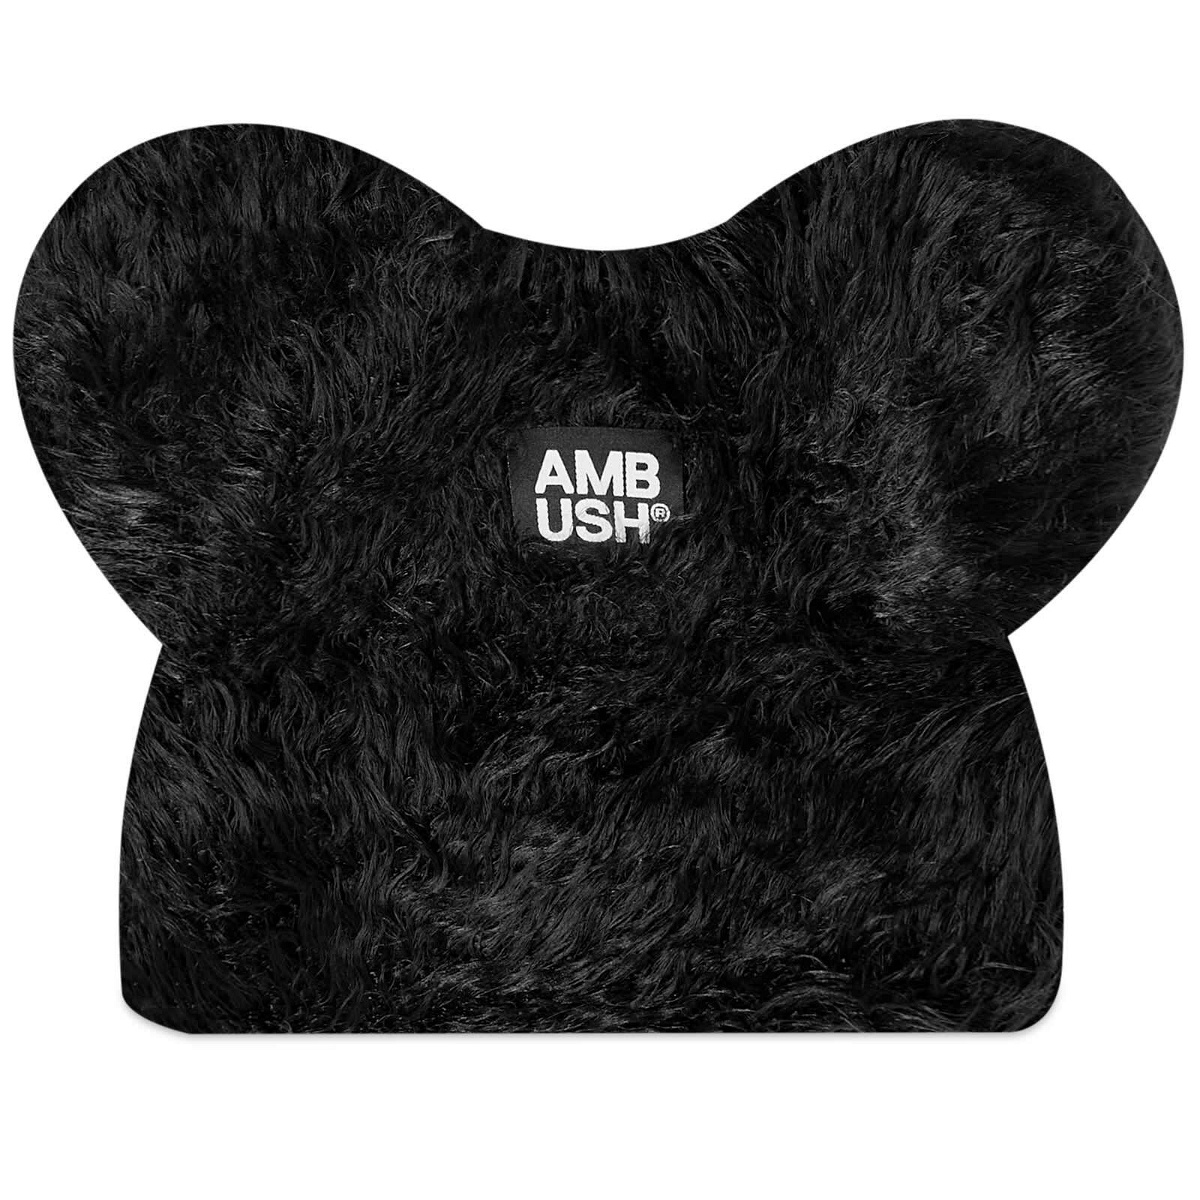 Ambush Women's Teddy Beanie Hat in Black Ambush